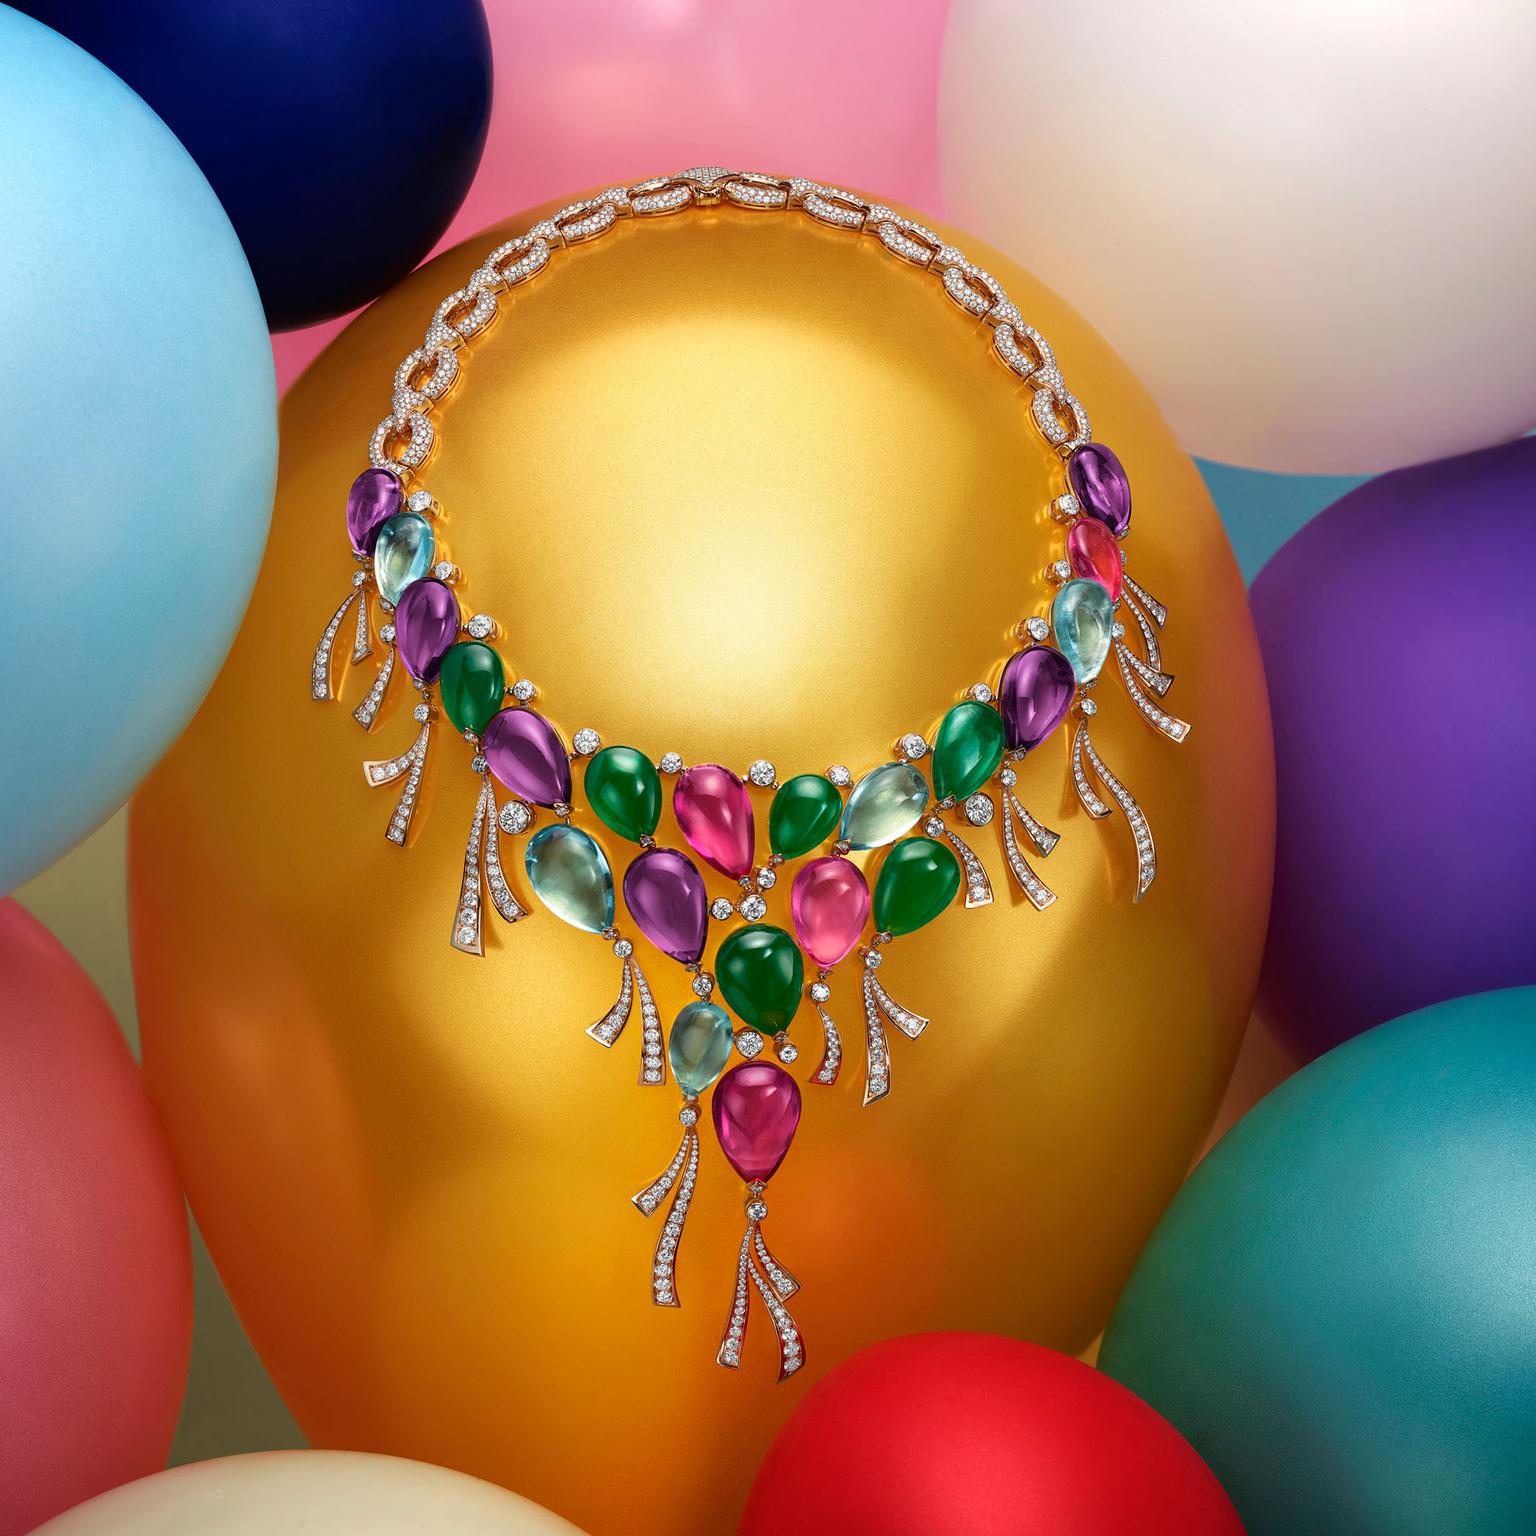 Bulgari Festa Palloncini balloon high jewellery necklace